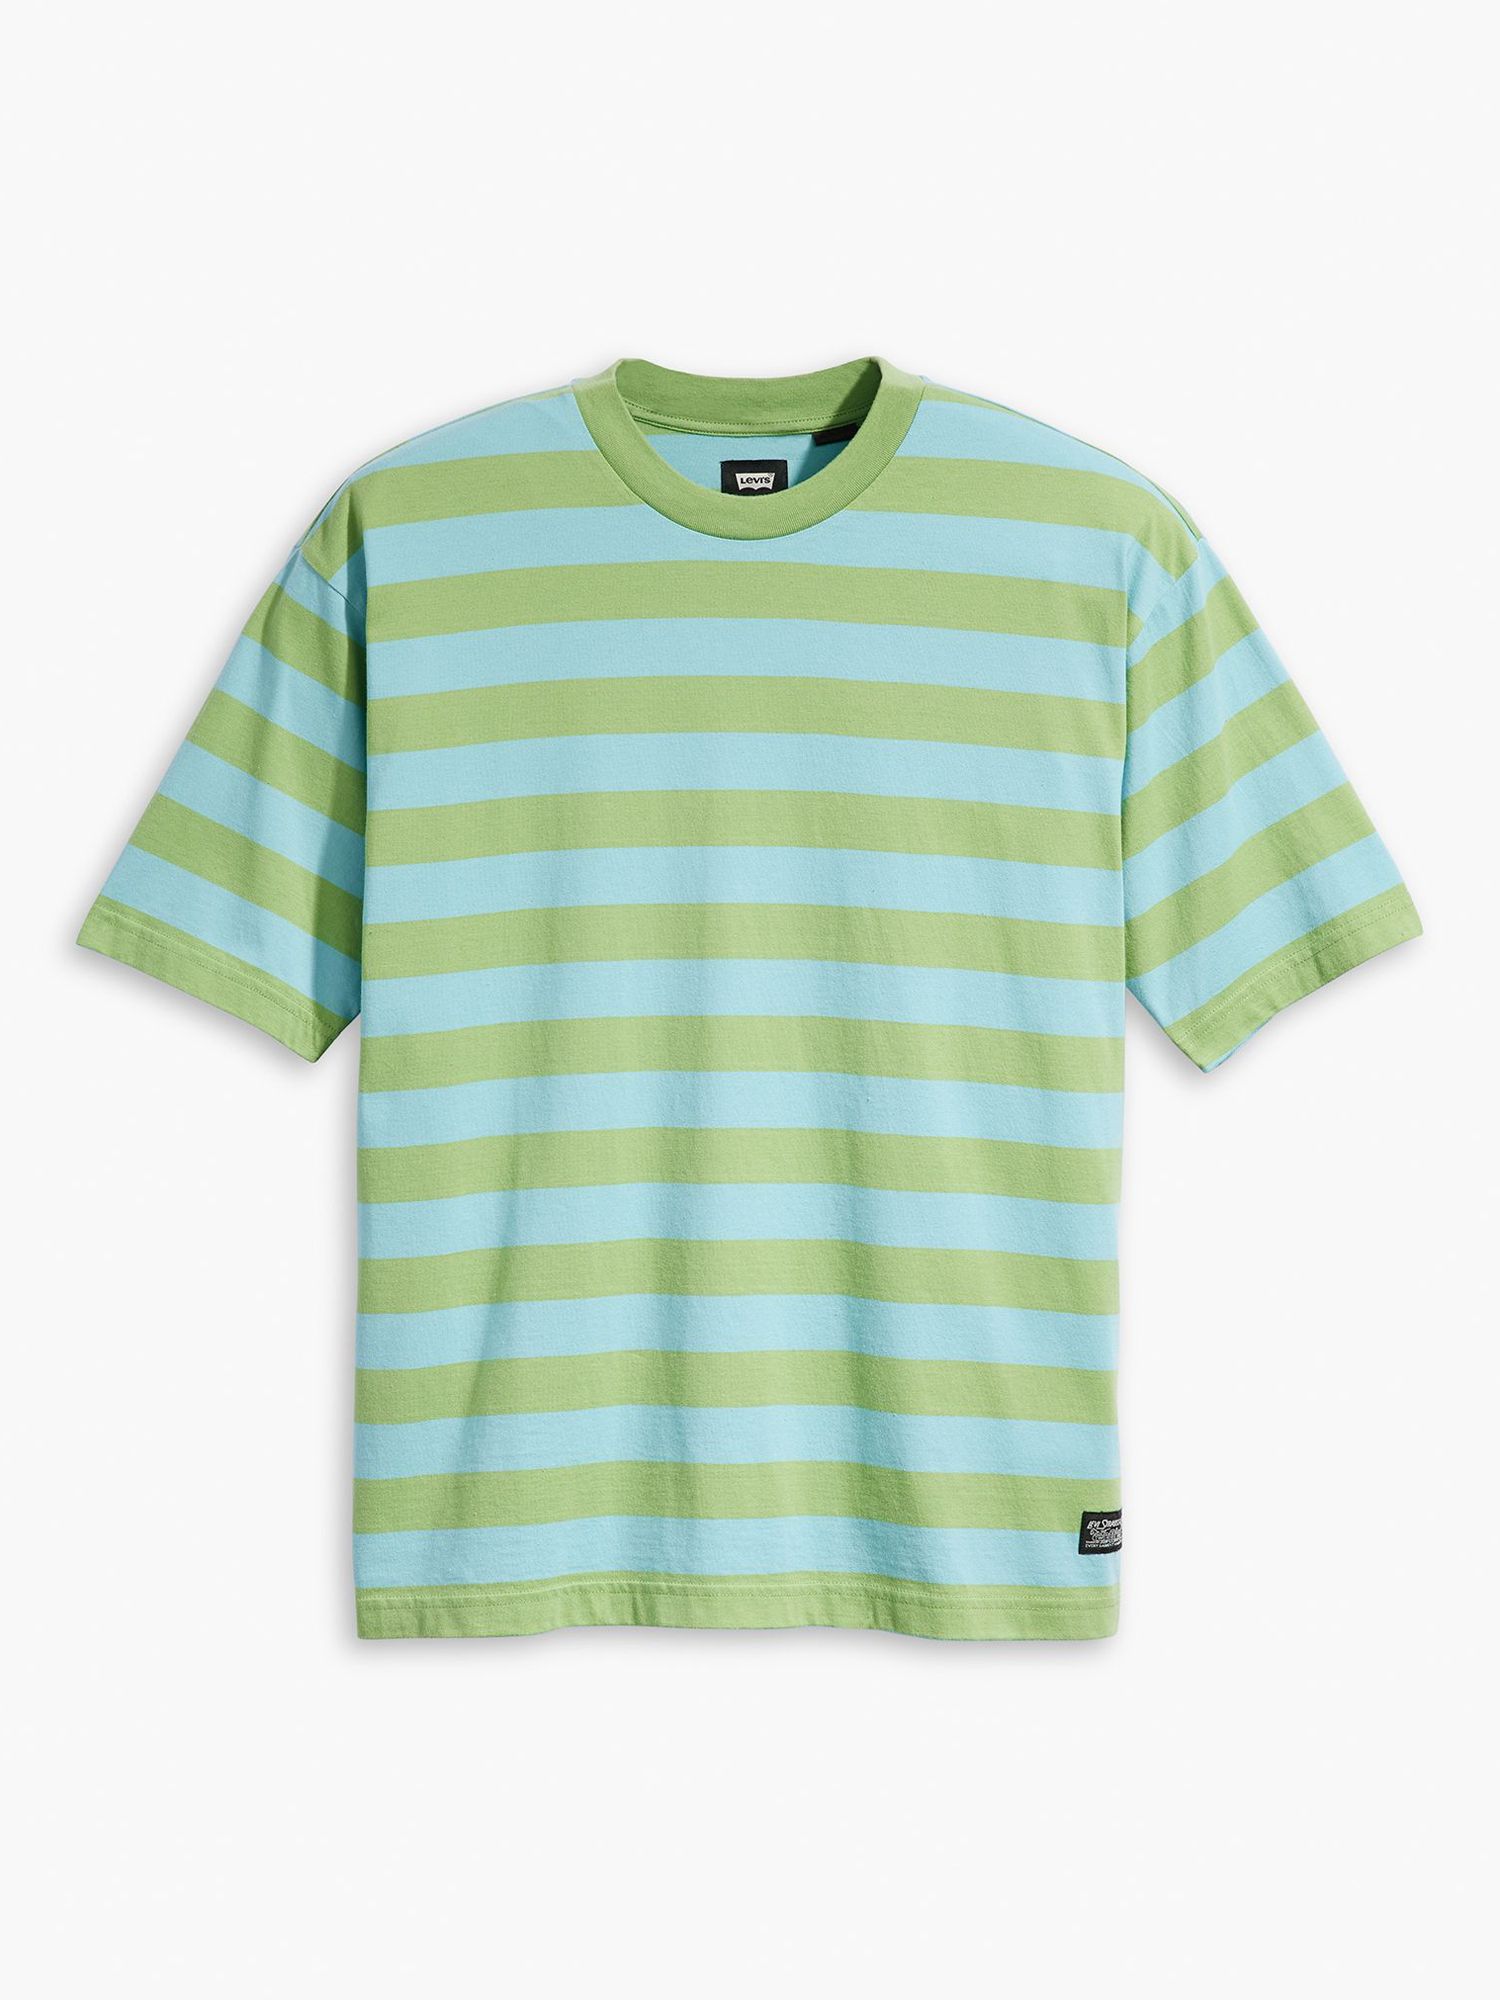 Levi's Skate Small Stripe Graph T-Shirt, Blue/Grey, M